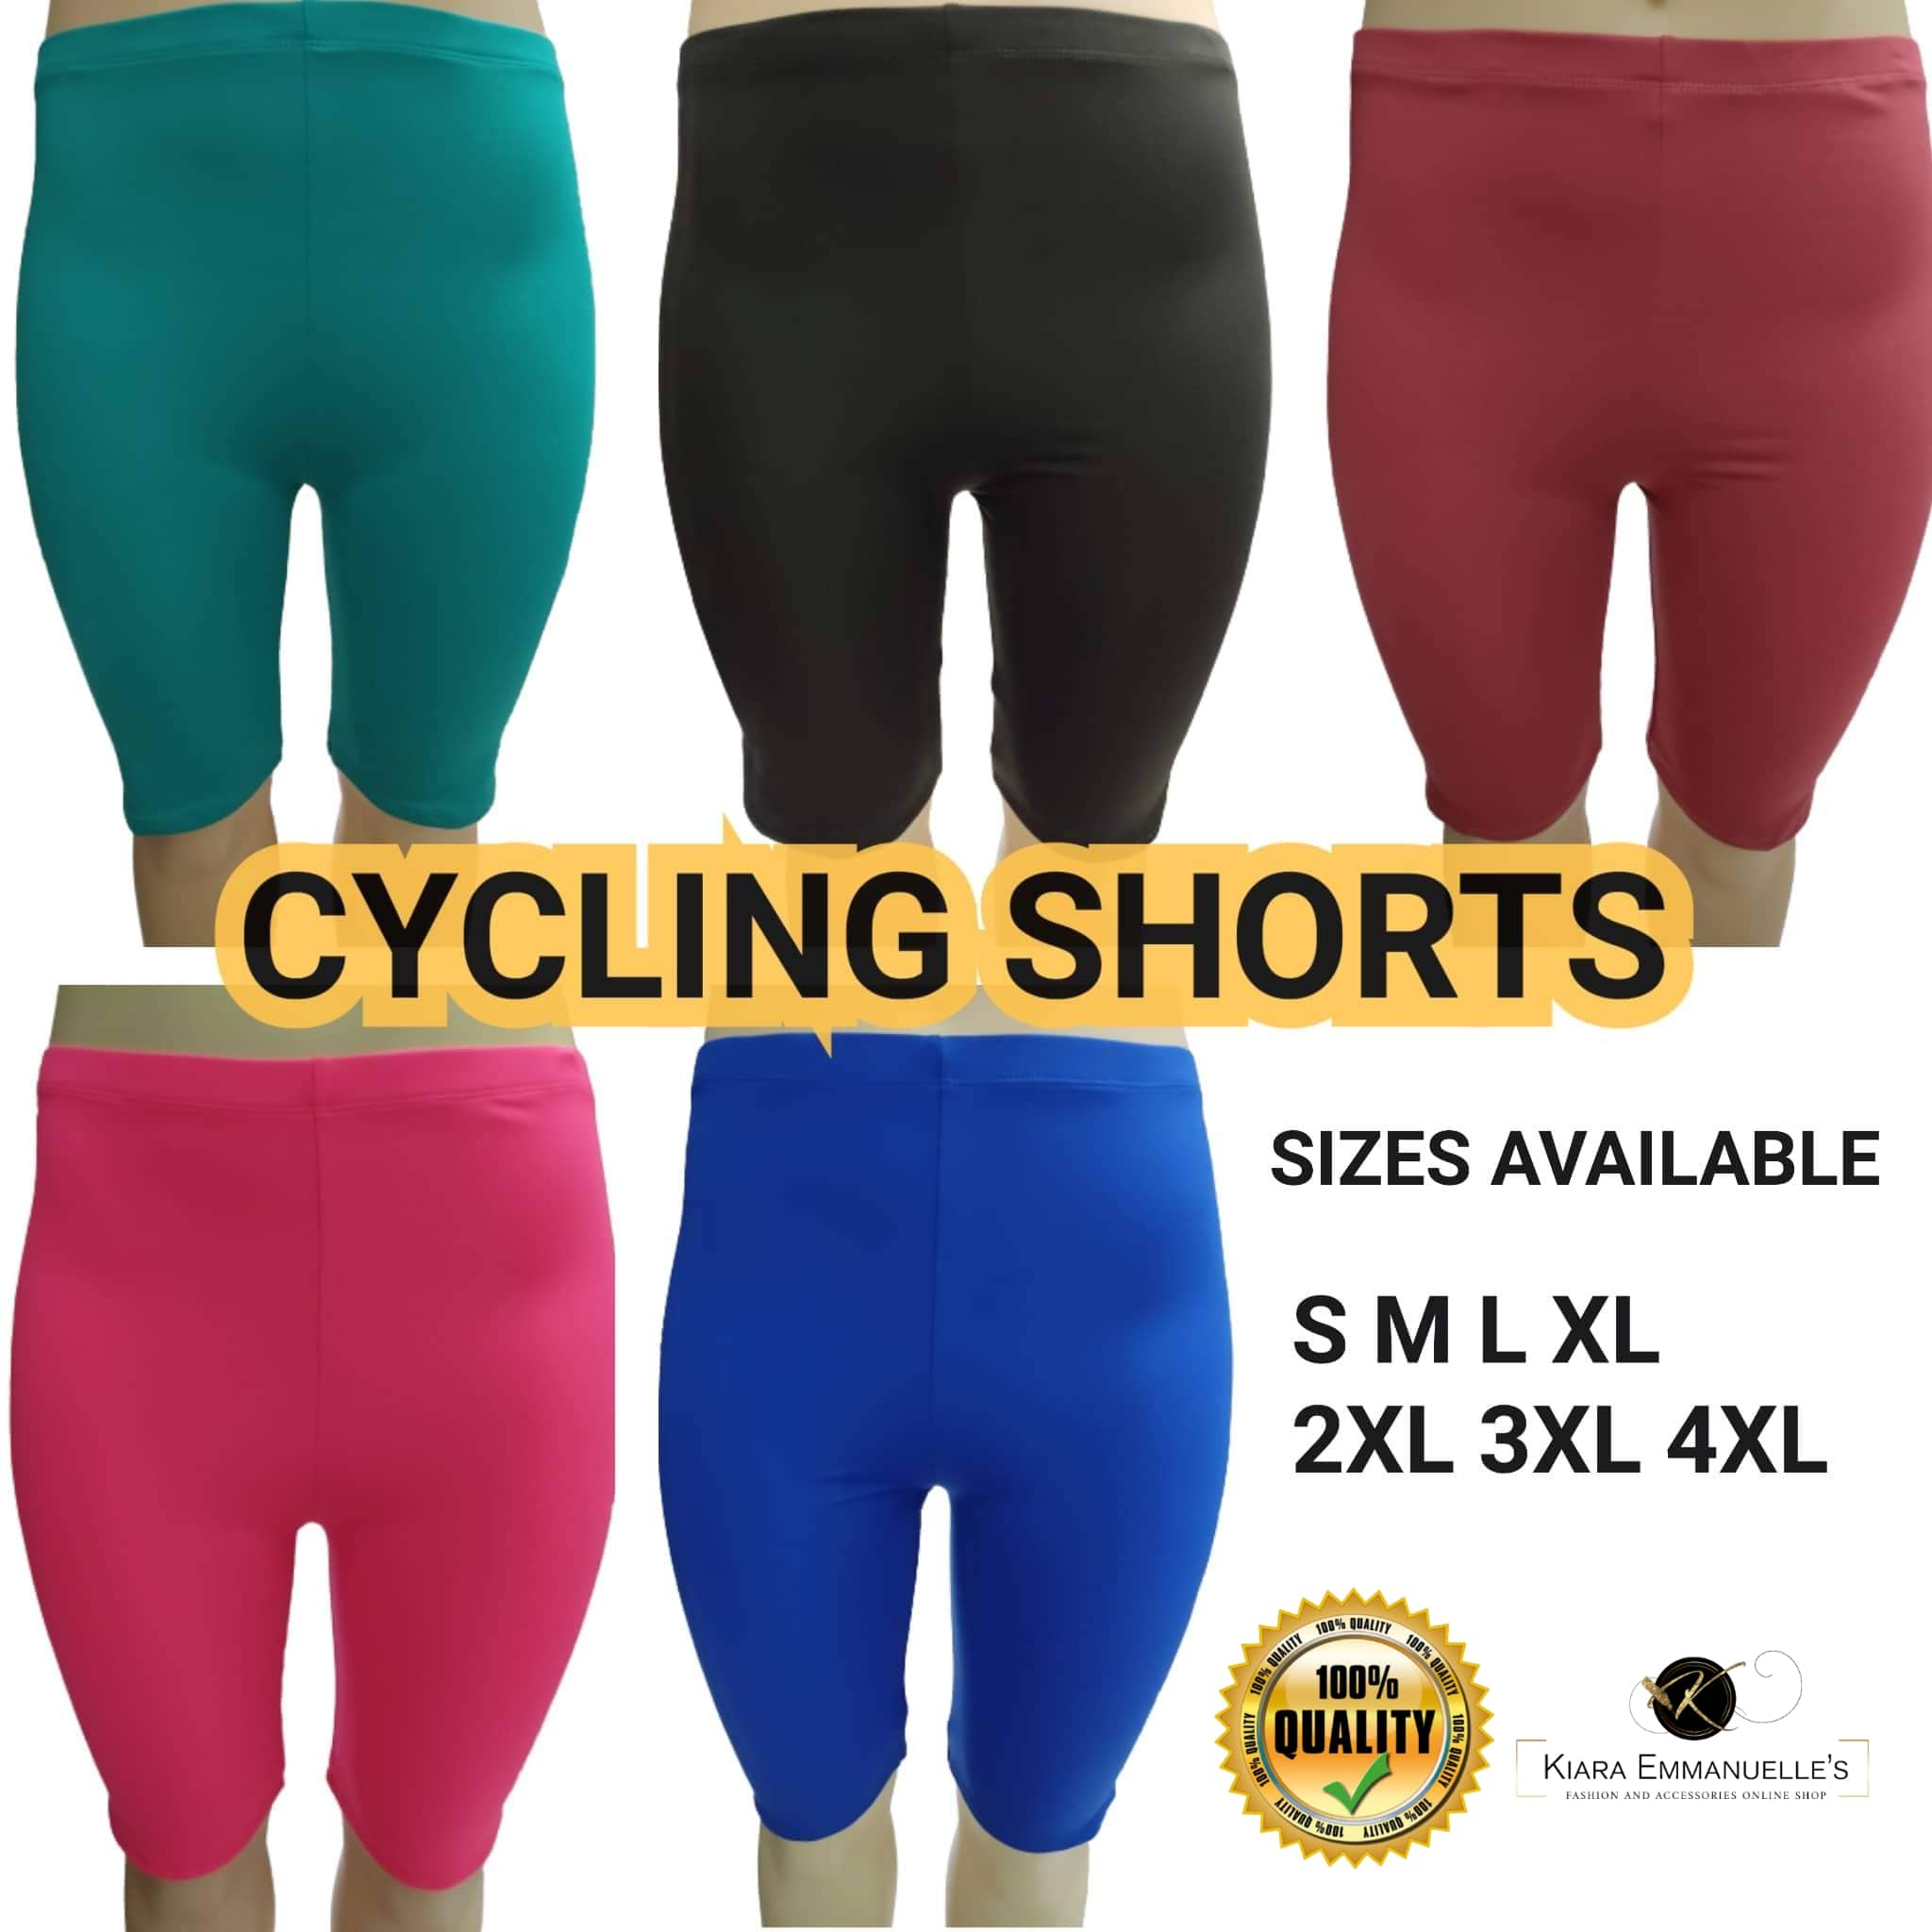 thick cycling shorts fashion